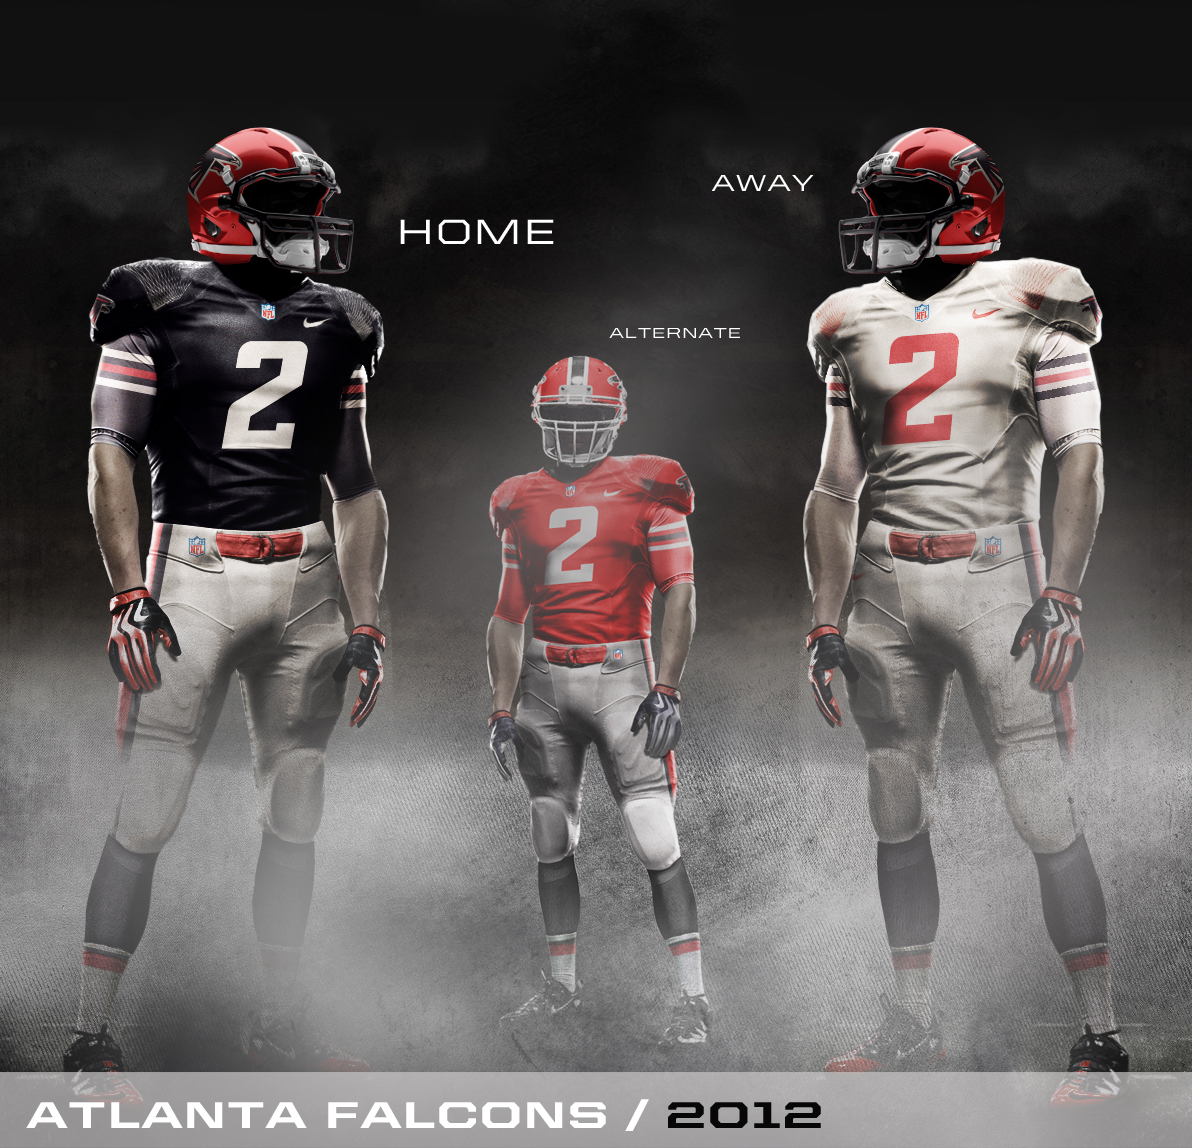 Atlanta Falcons need to ditch their black on black uniforms